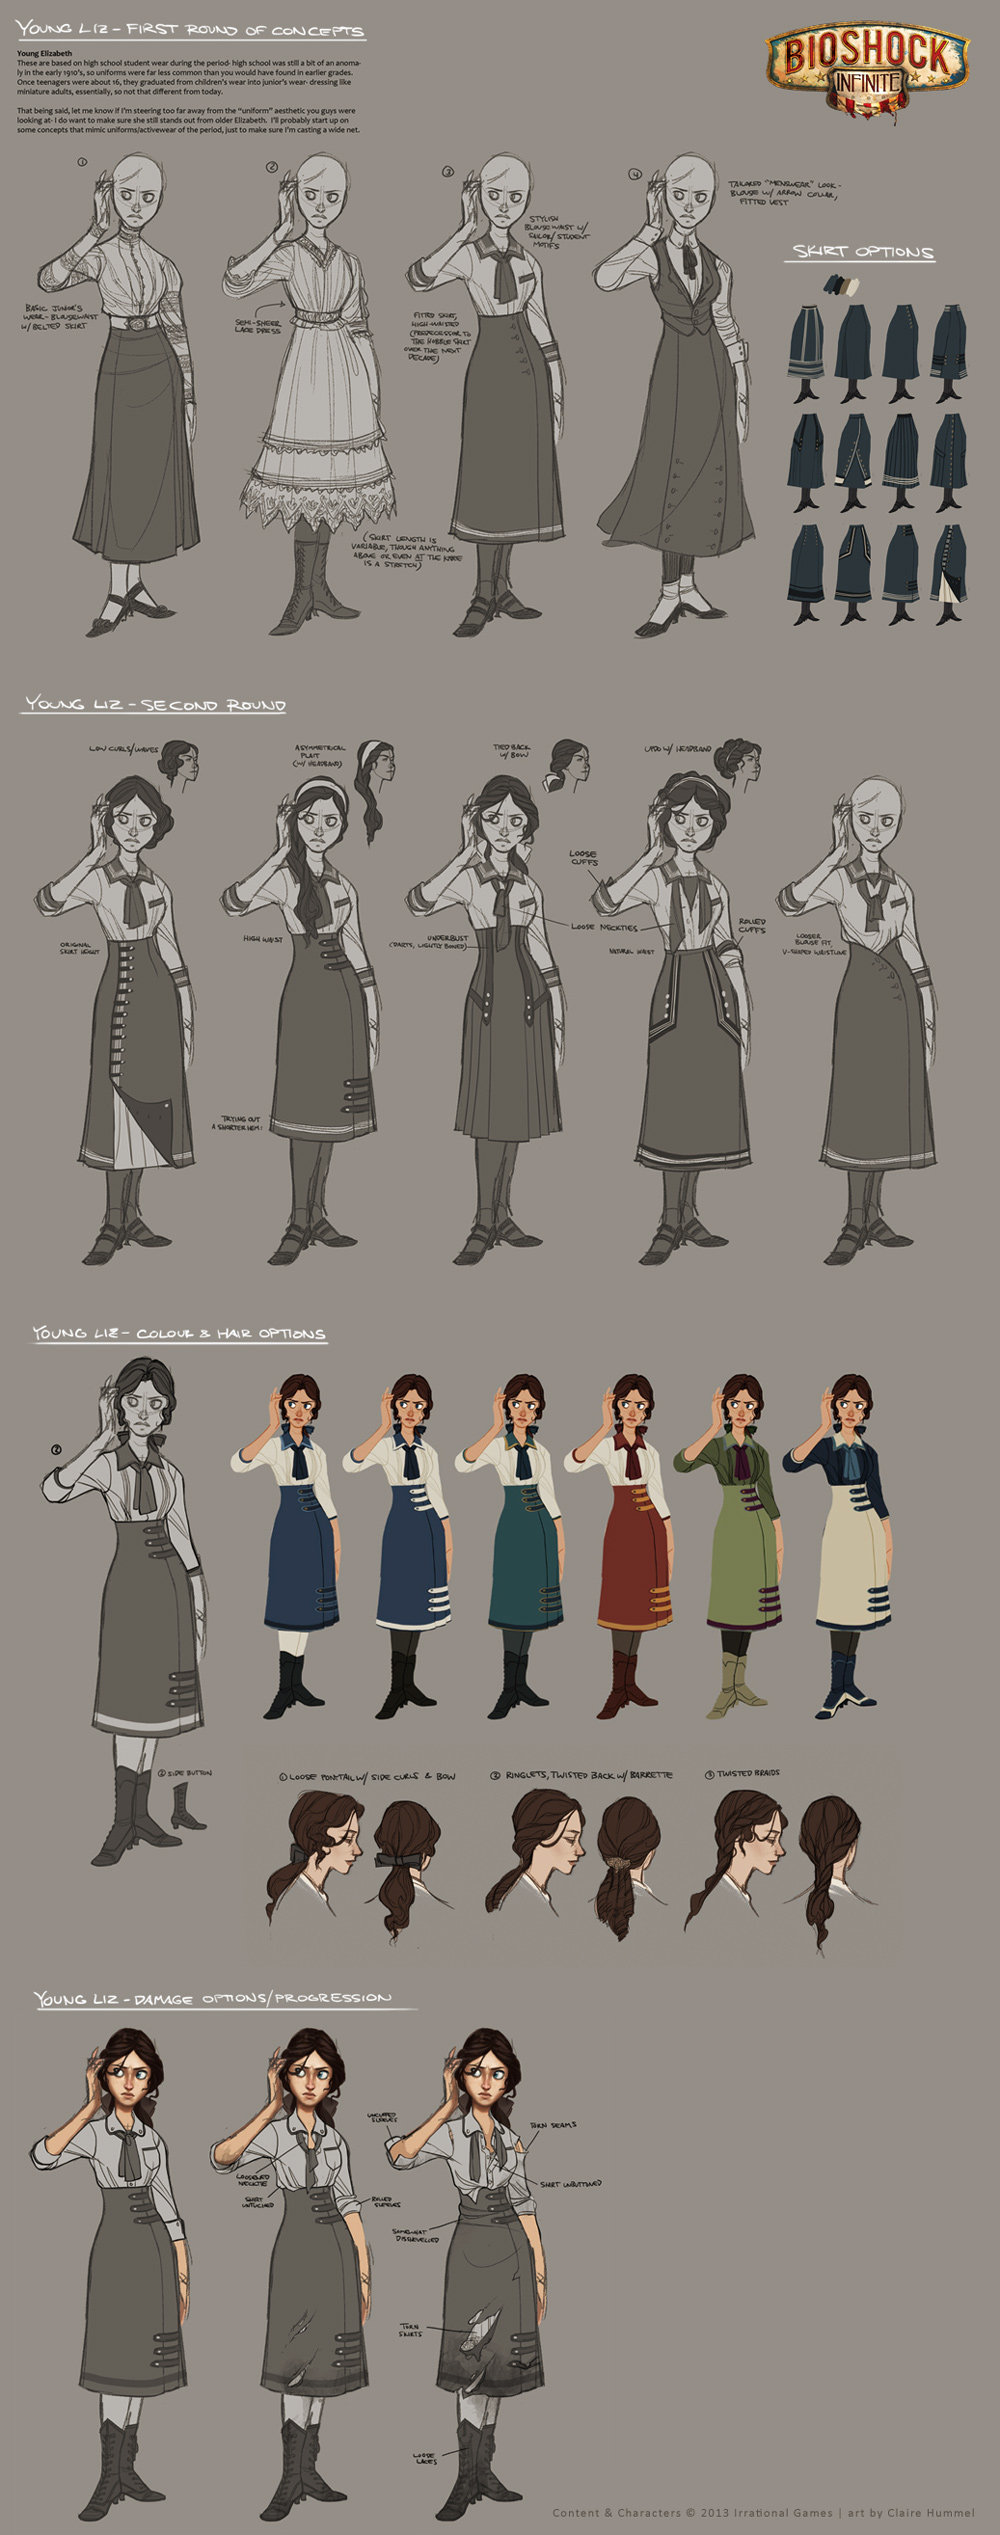 Bioshock Infinite - Young Liz costume development